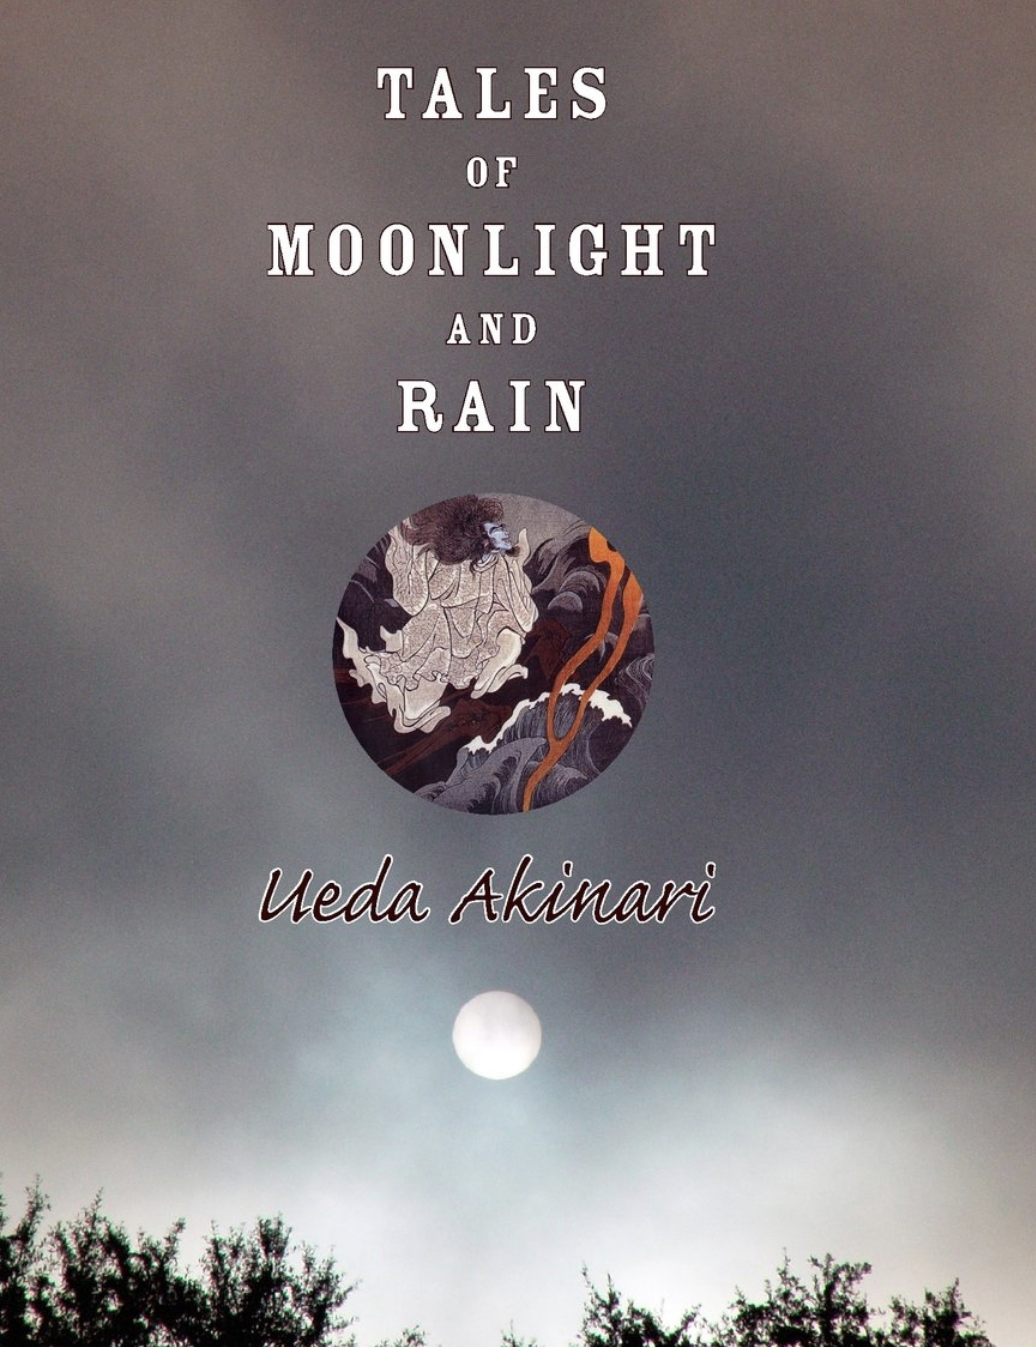 "Tales of Moonlight and Rain" by Ueda Akinari.